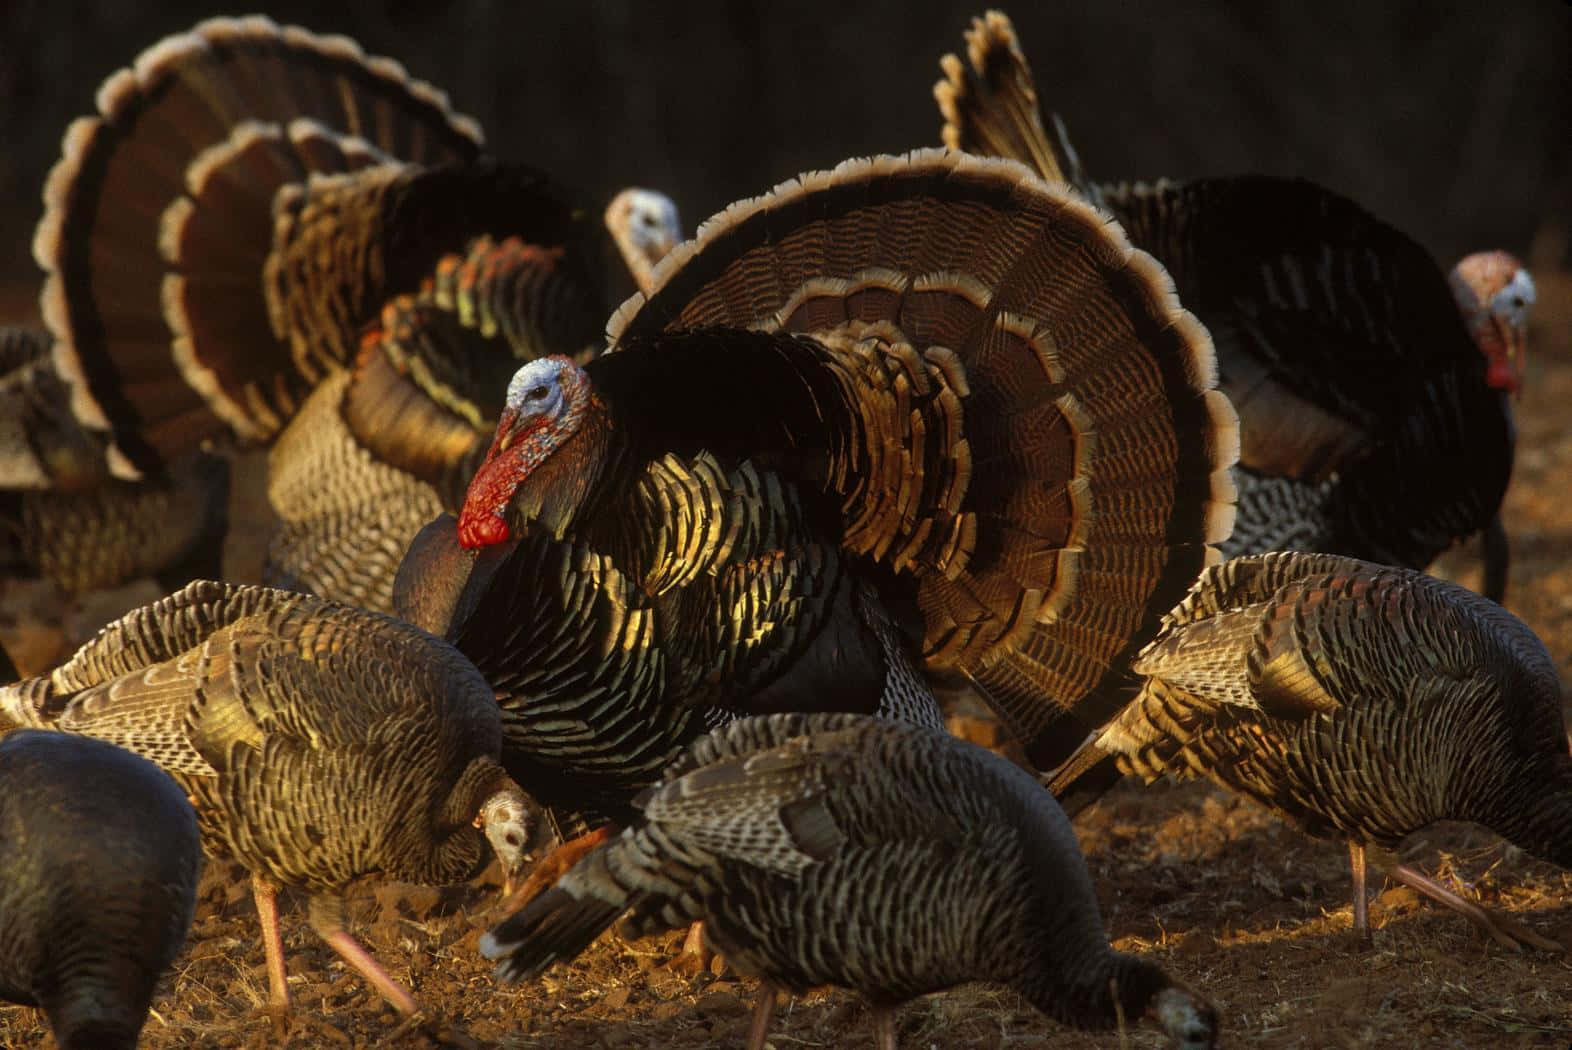 A Group Of Turkeys Are Walking In The Field